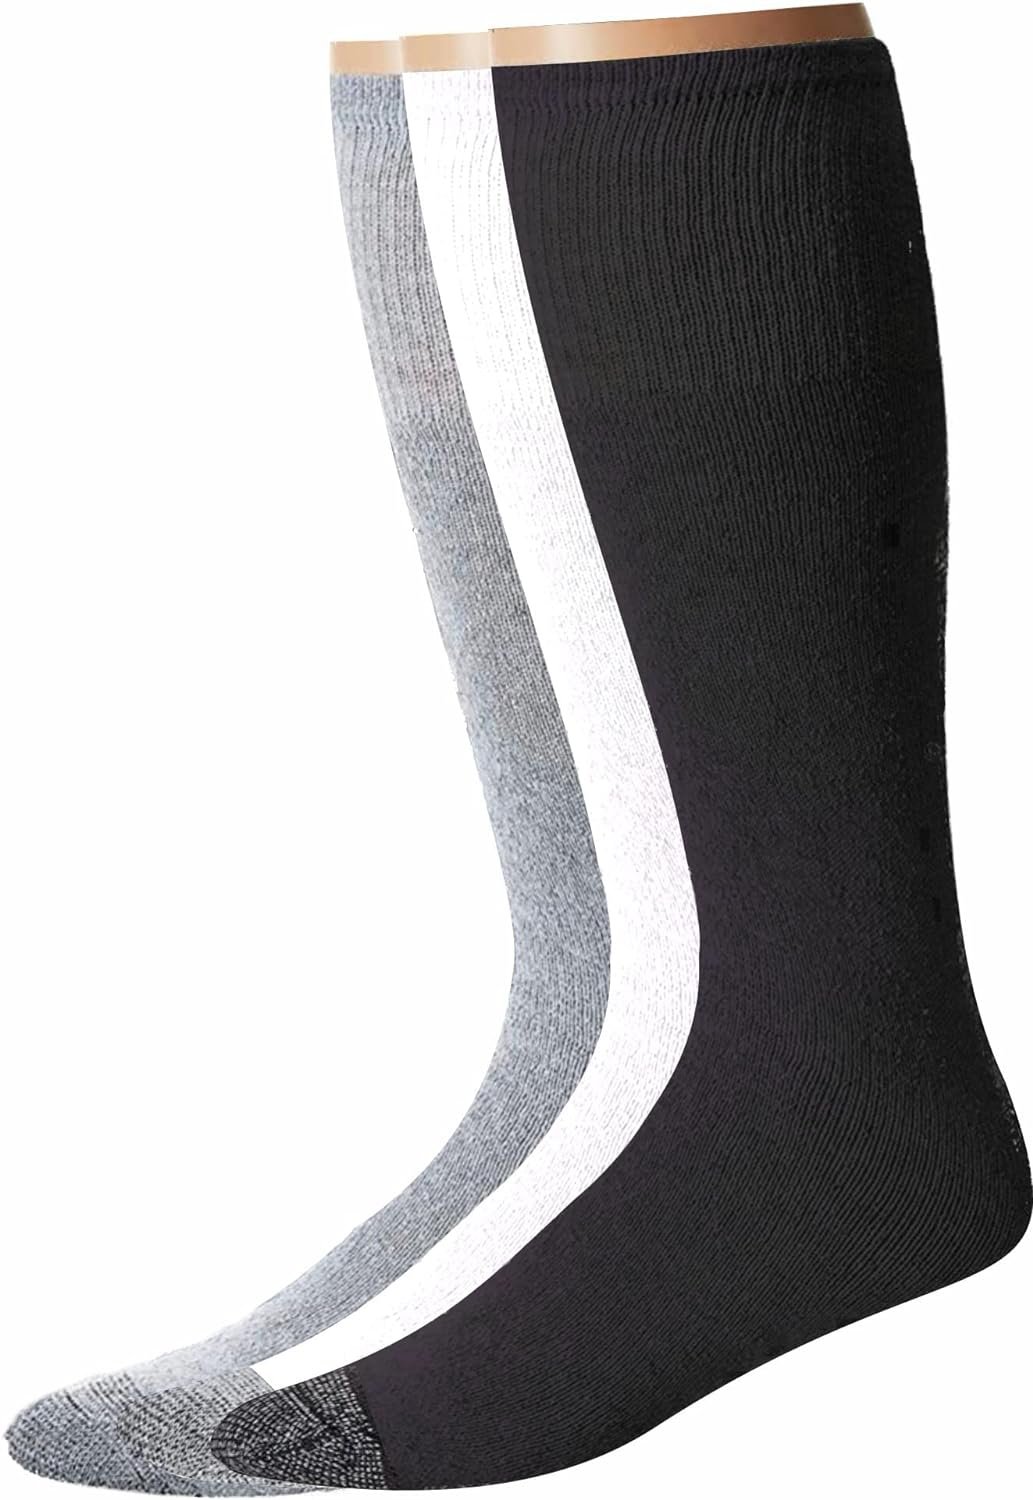 Diamond Star Tube Socks Men 6 Pairs Premium Cushion Cotton Over The Calf Athletic Knee High Socks For Men Big & Tall Review